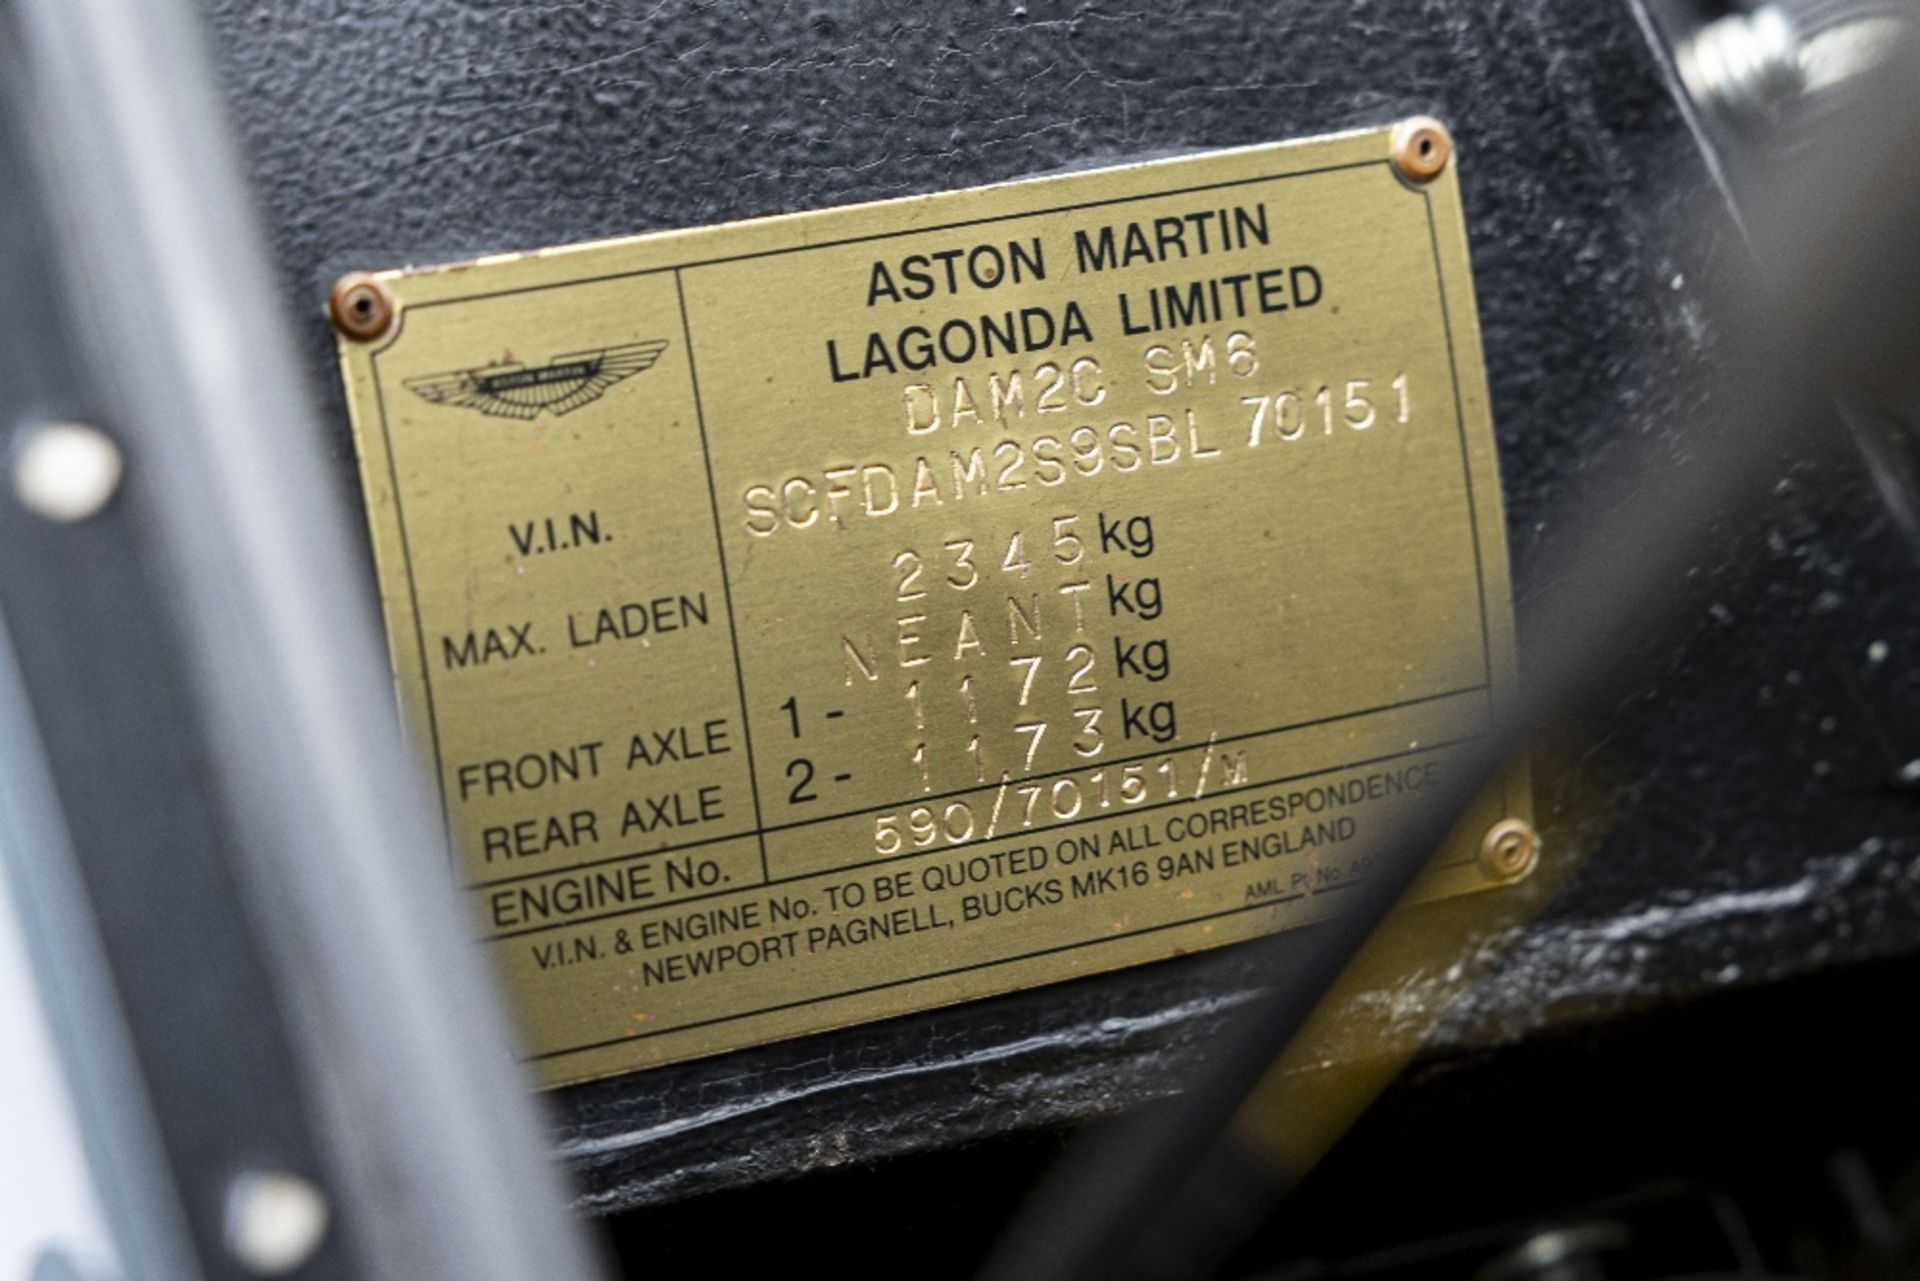 1996 Aston Martin Vantage Coup&#233; Chassis no. SCFDAM2S9SBL70151 - Bild 17 aus 22